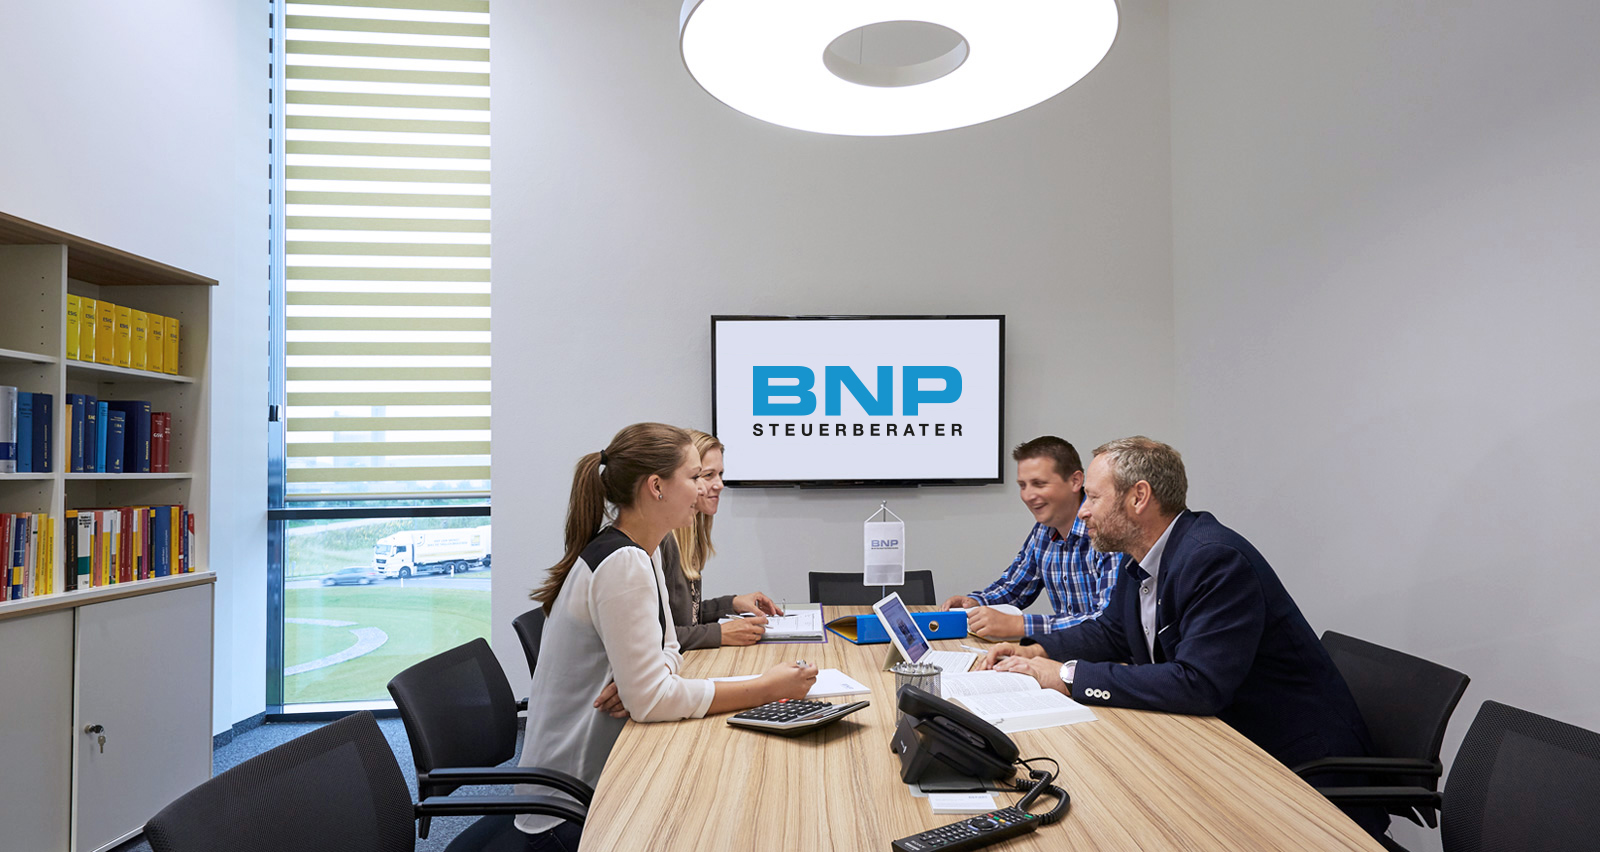 BNP - Beratung